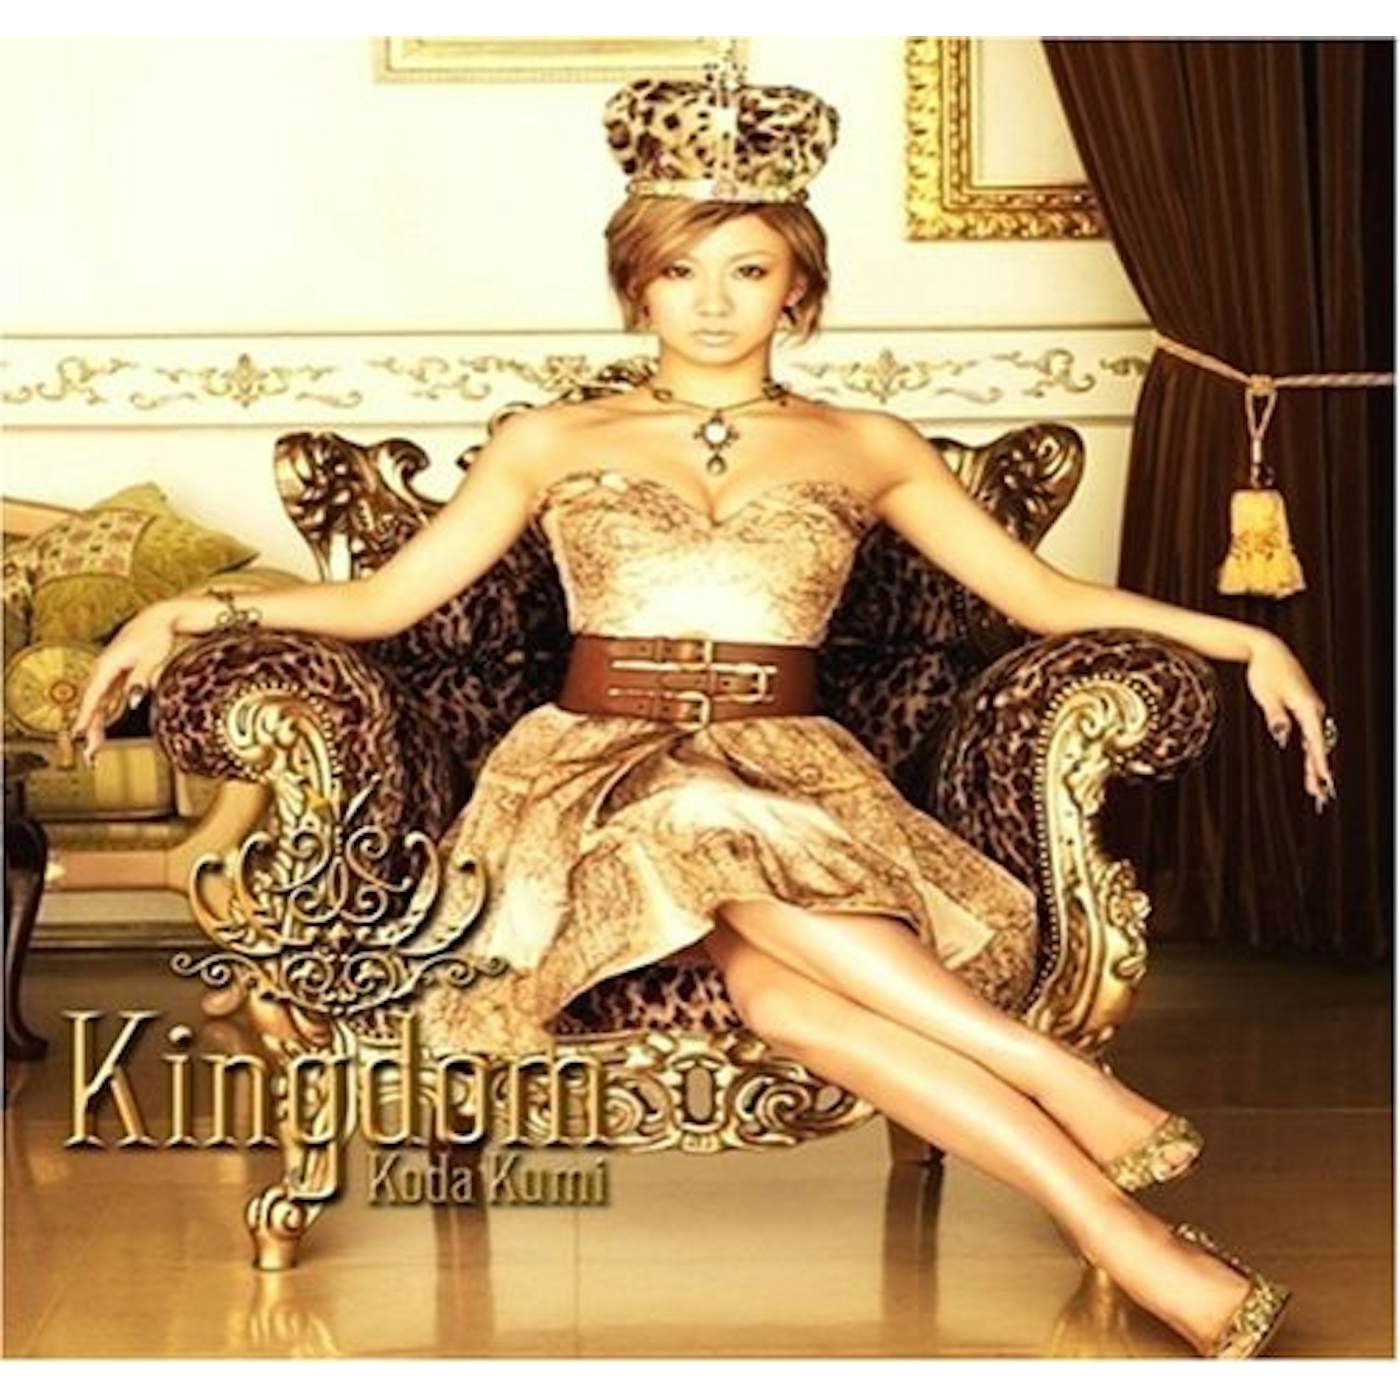 Kumi Koda KINGDOM CD